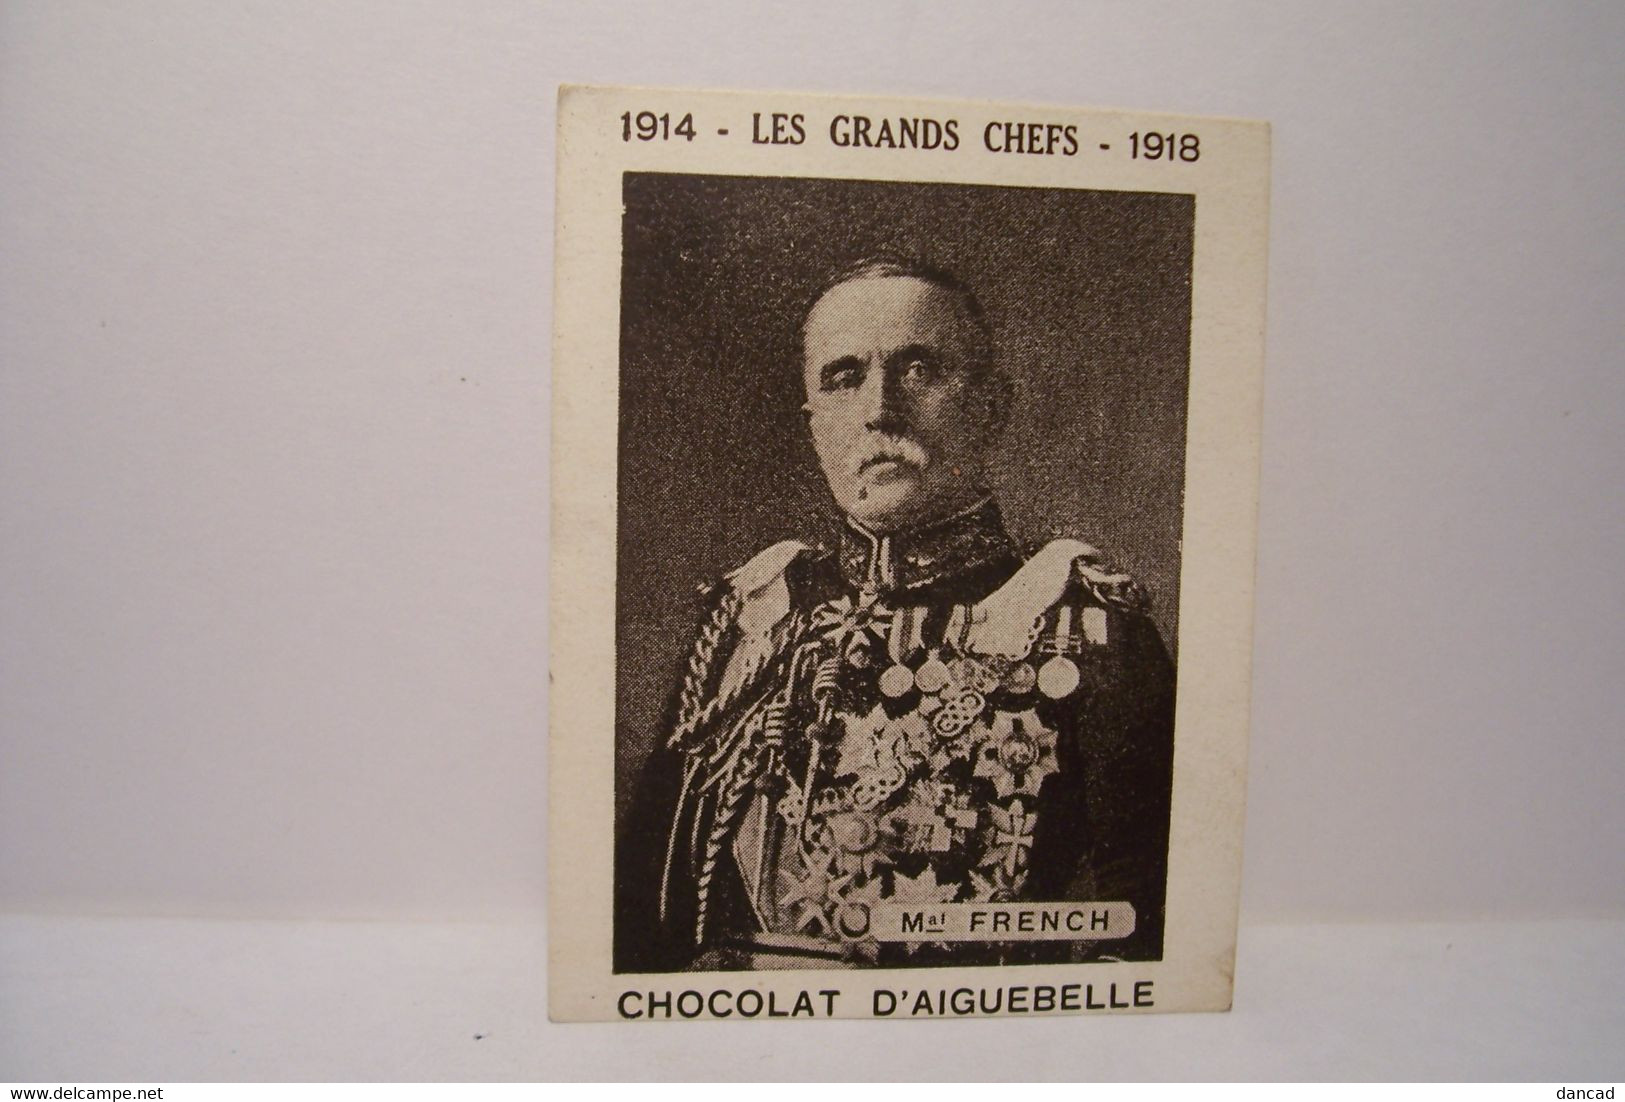 1914 -LES GRANDS CHEFS - 1918  - MARECHAL  FRENCH - CHOCOLAT D'AIGUEBELLE  - MILITARIA - Aiguebelle